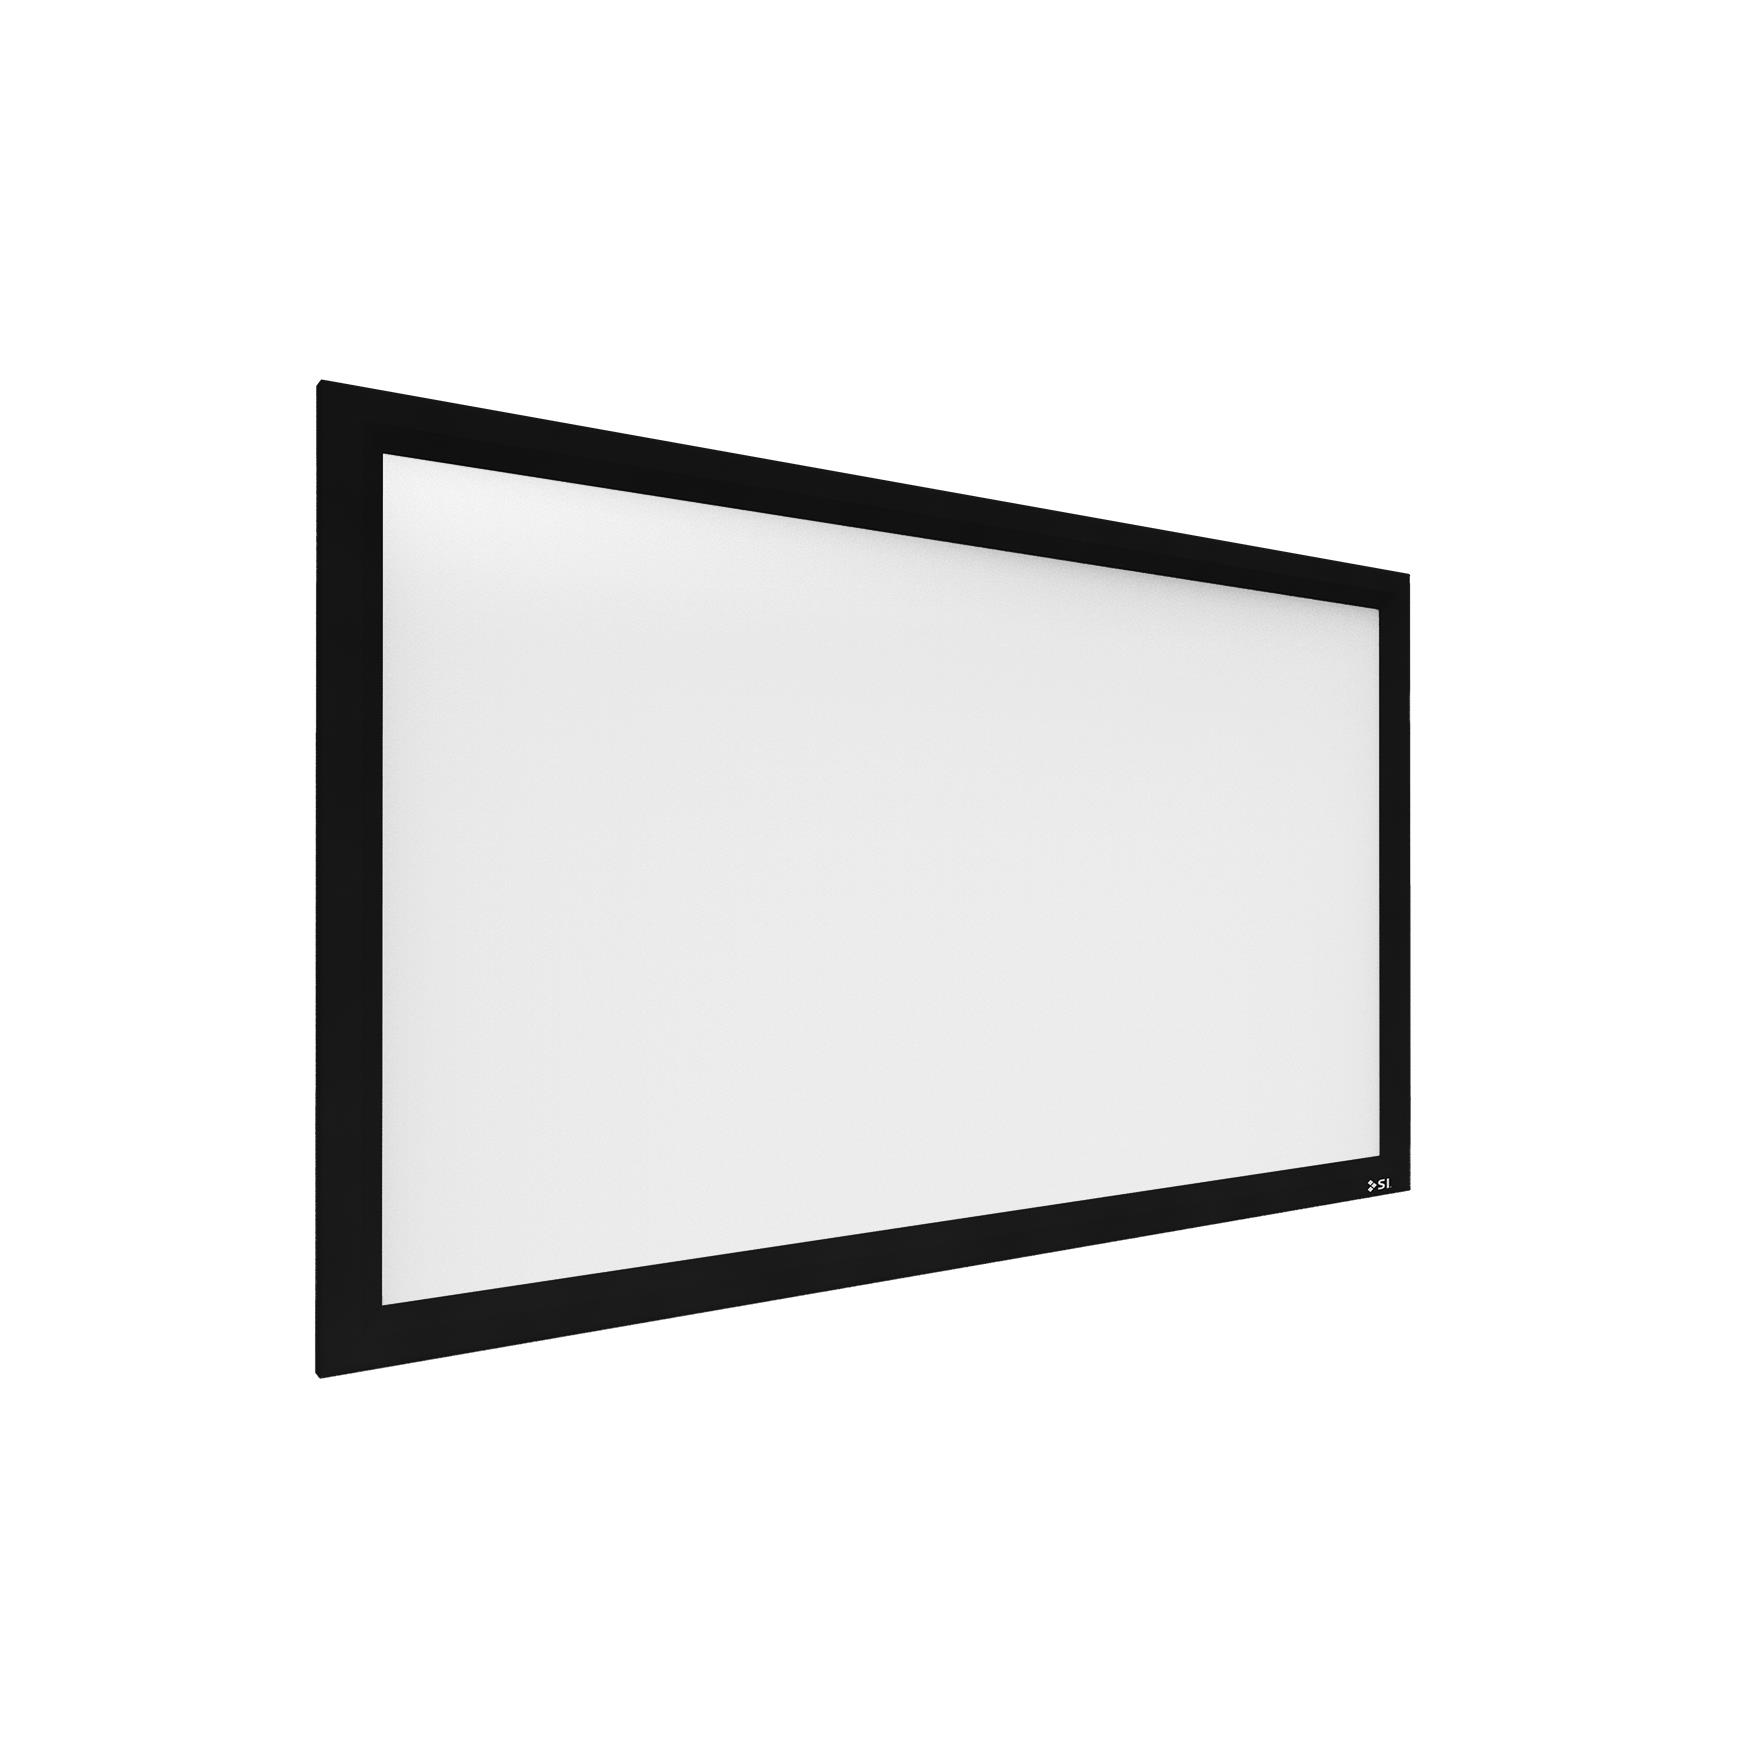 160" 16x9 Solar White Screen 1.3 Gain